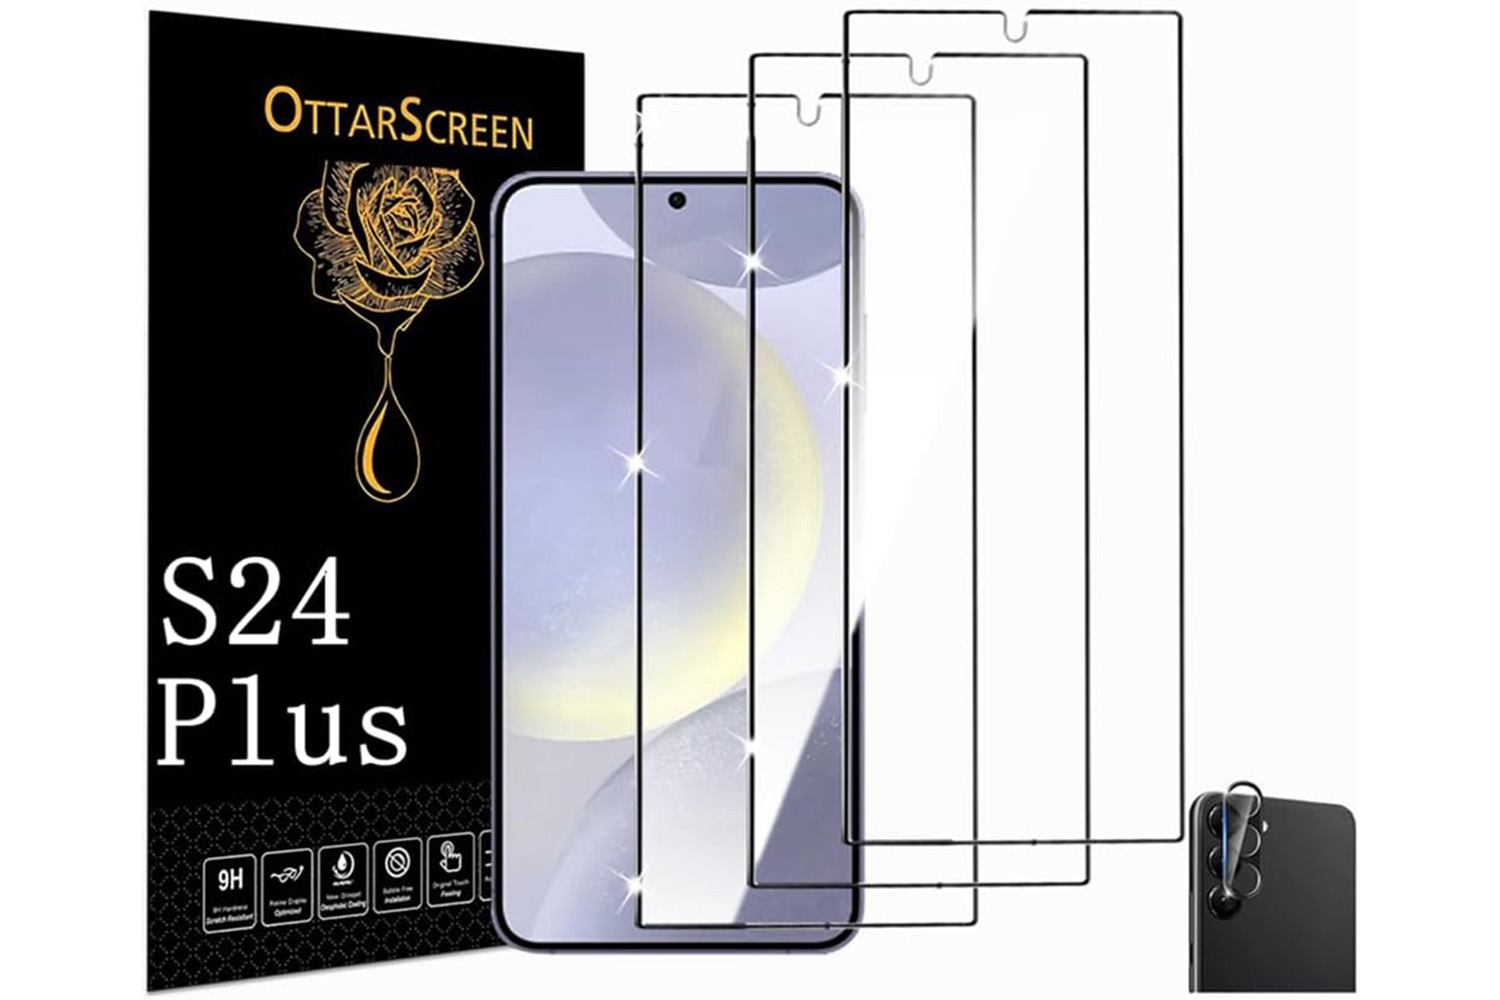 OttarScreen Galaxy S24 Plus Screen Protector.